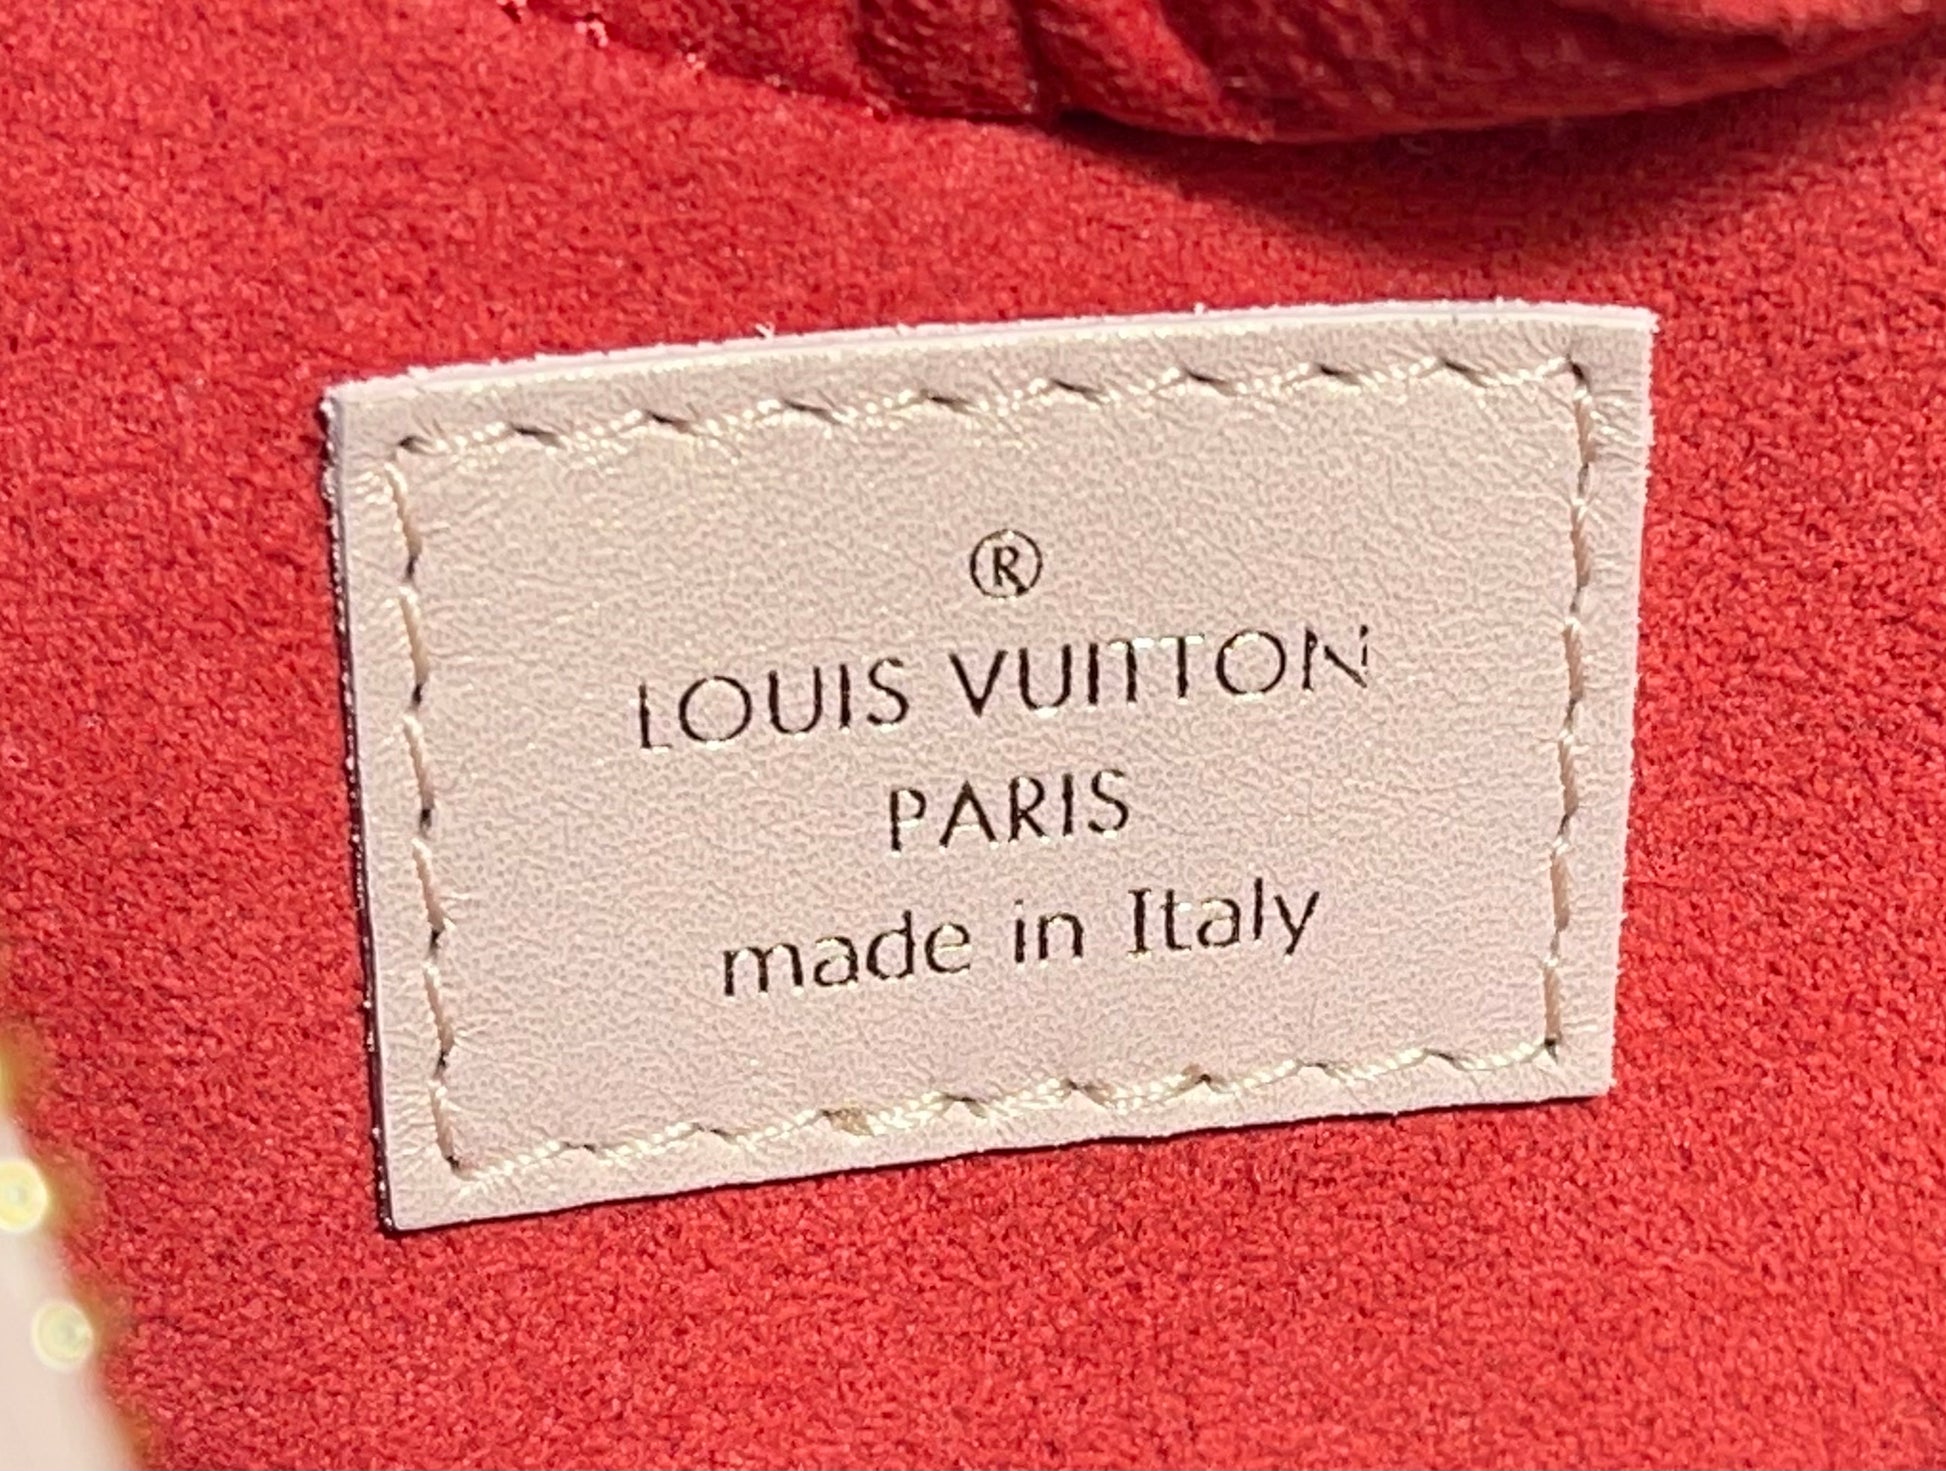 Louis Vuitton Fall in Love Heart heartbox Crossbody bag Hong Kong